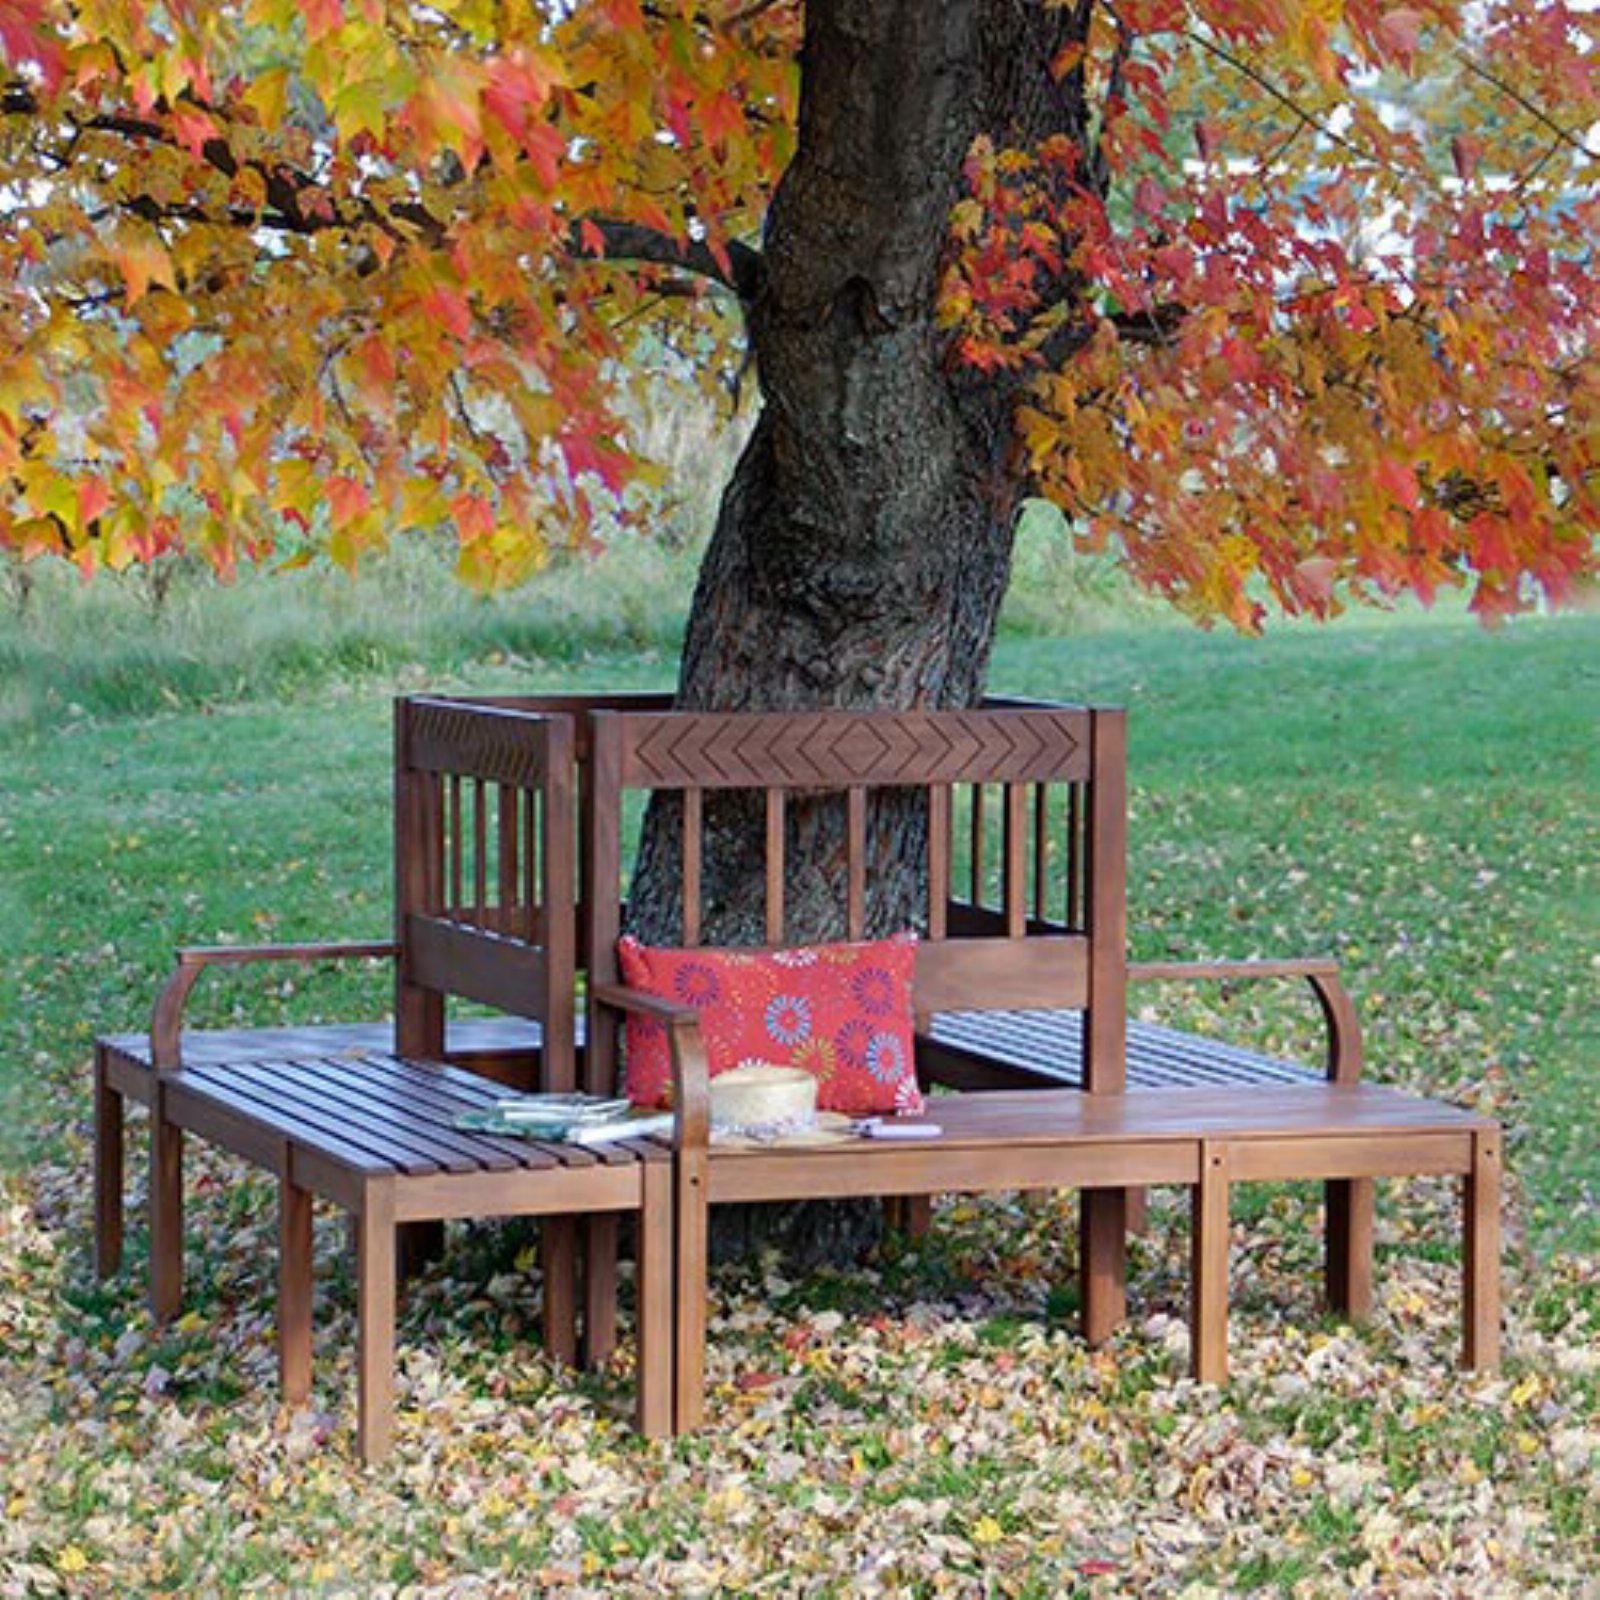 Achla Designs Oxford Tree Garden Bench - image 1 of 2